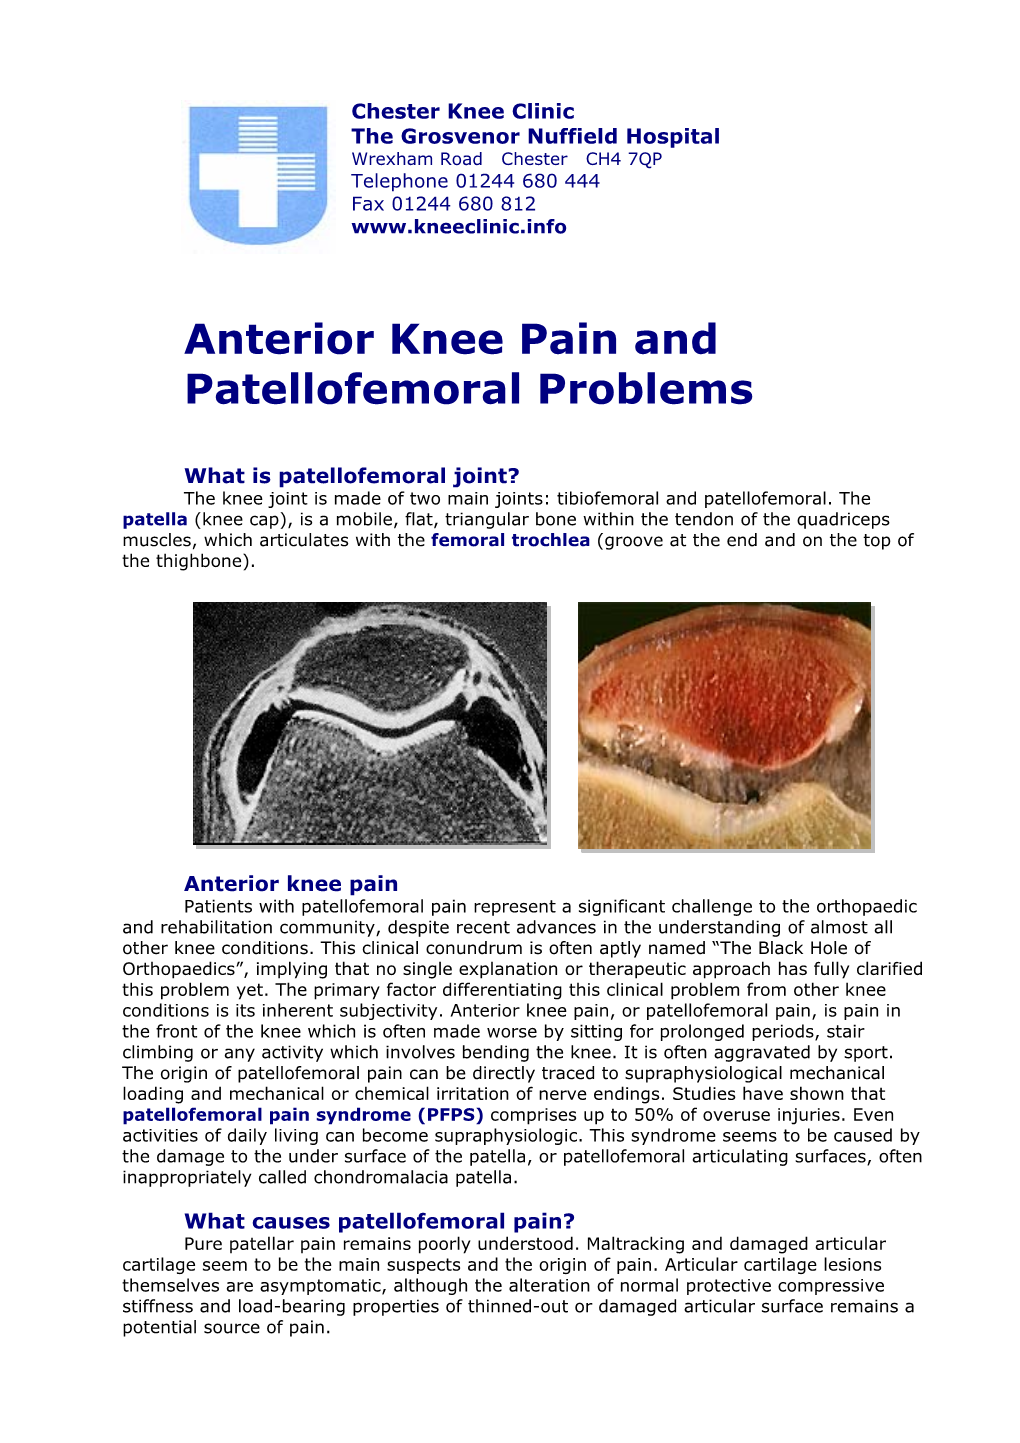 Anterior Knee Pain and Patellofemoral Problems